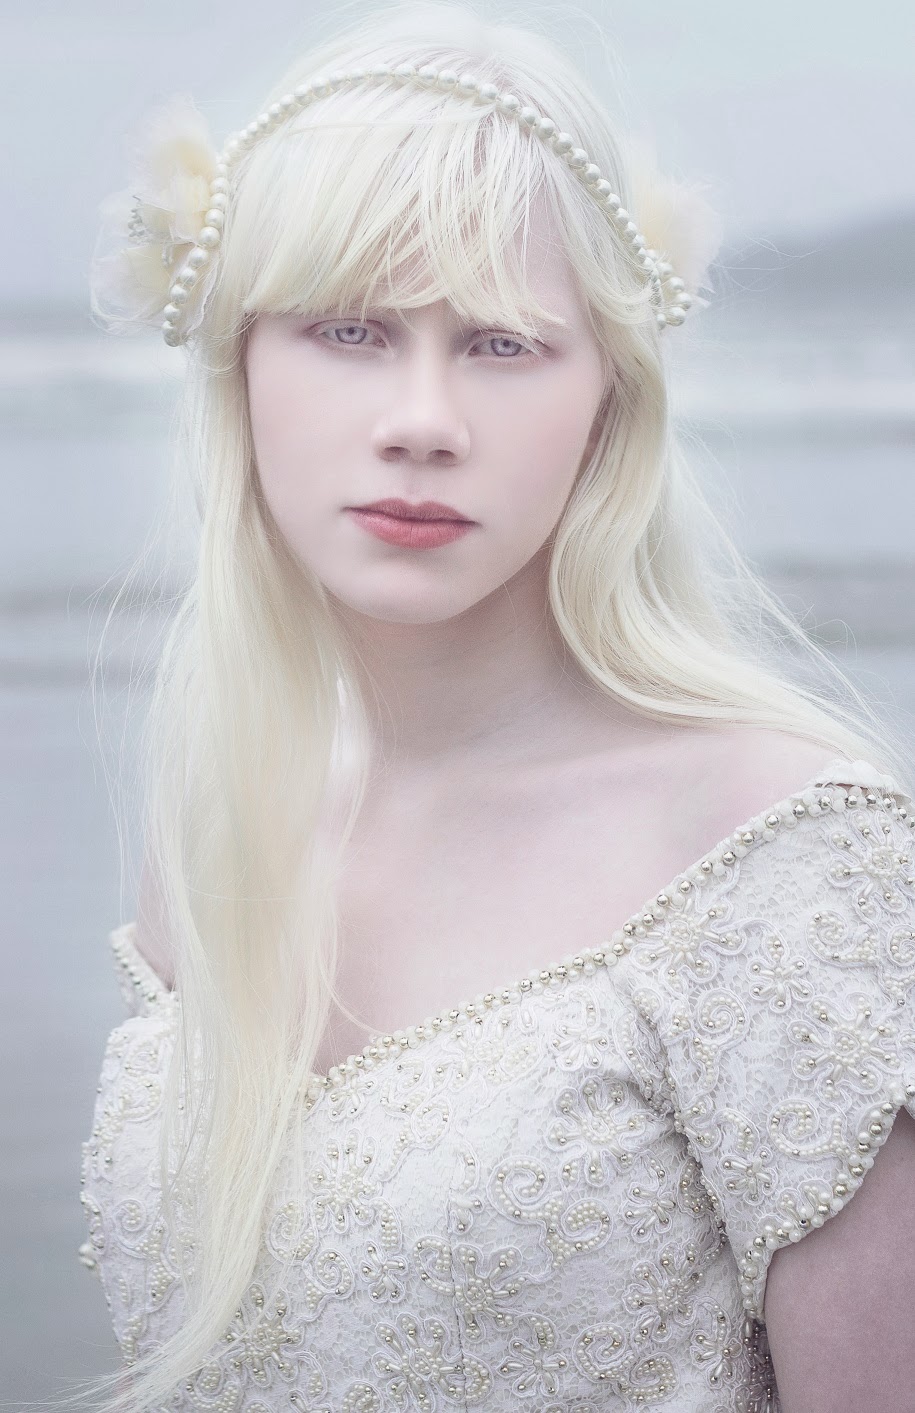 Albino Beauty on Pinterest | Albinism, Shaun Ross and Albino Model